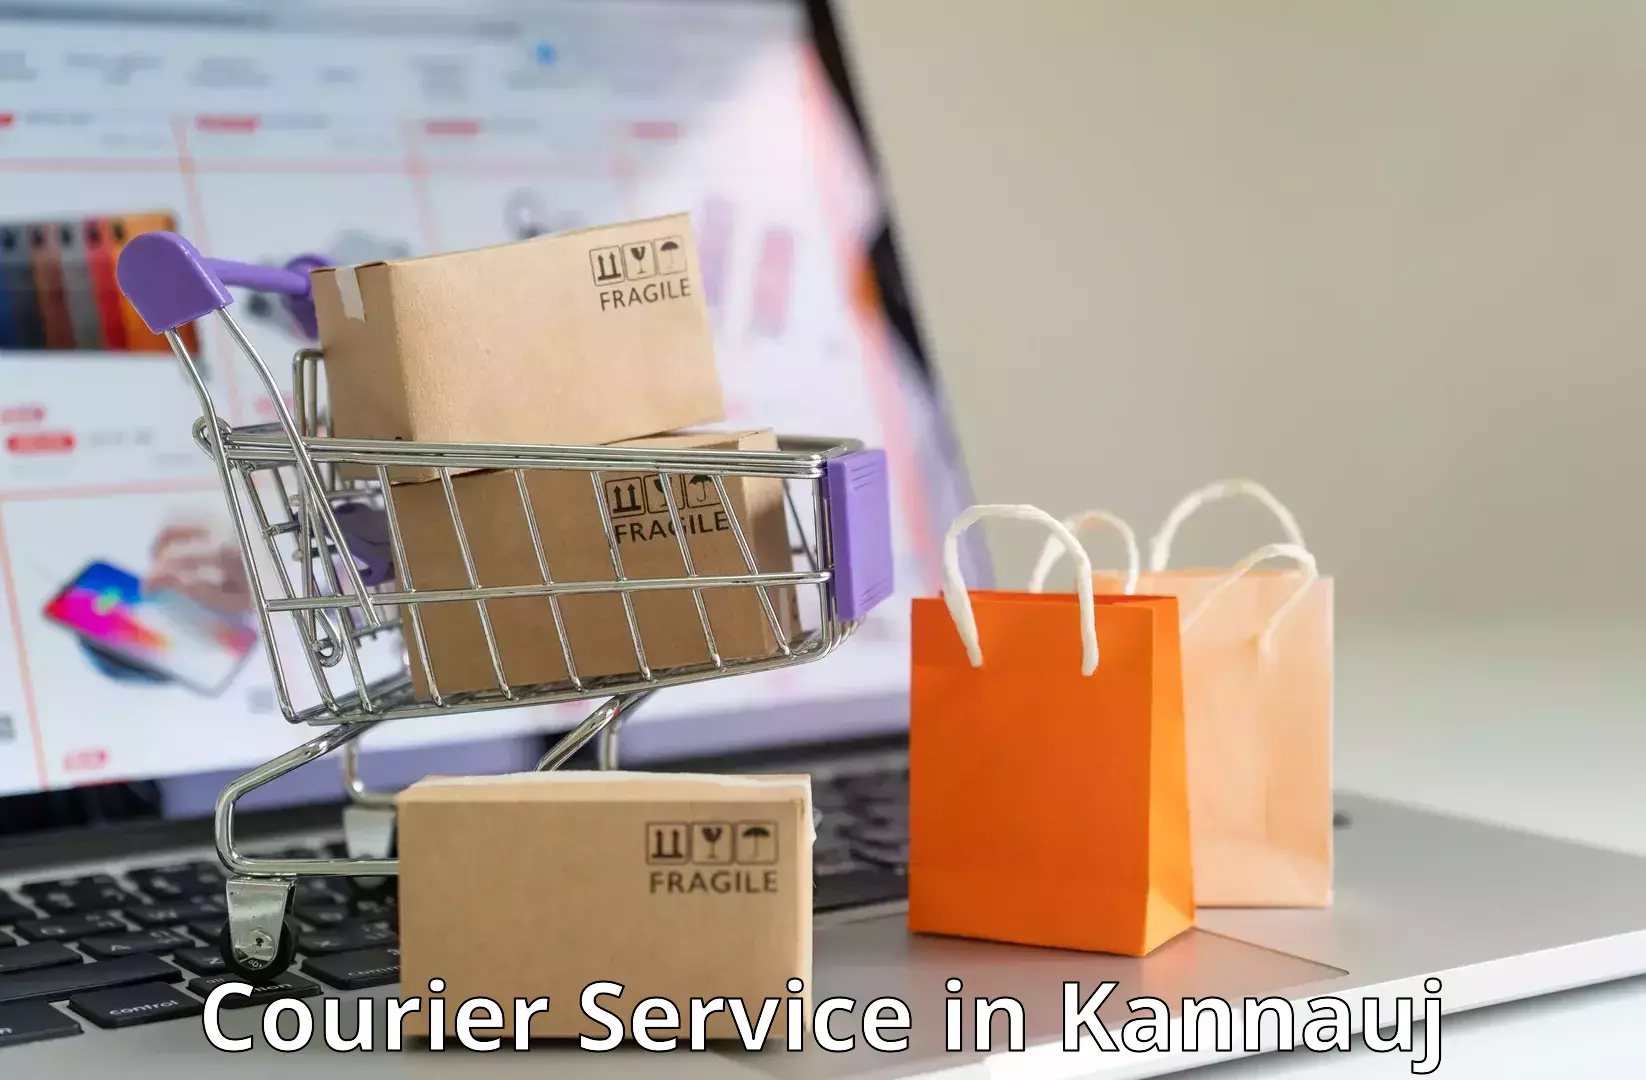 Efficient logistics management in Kannauj